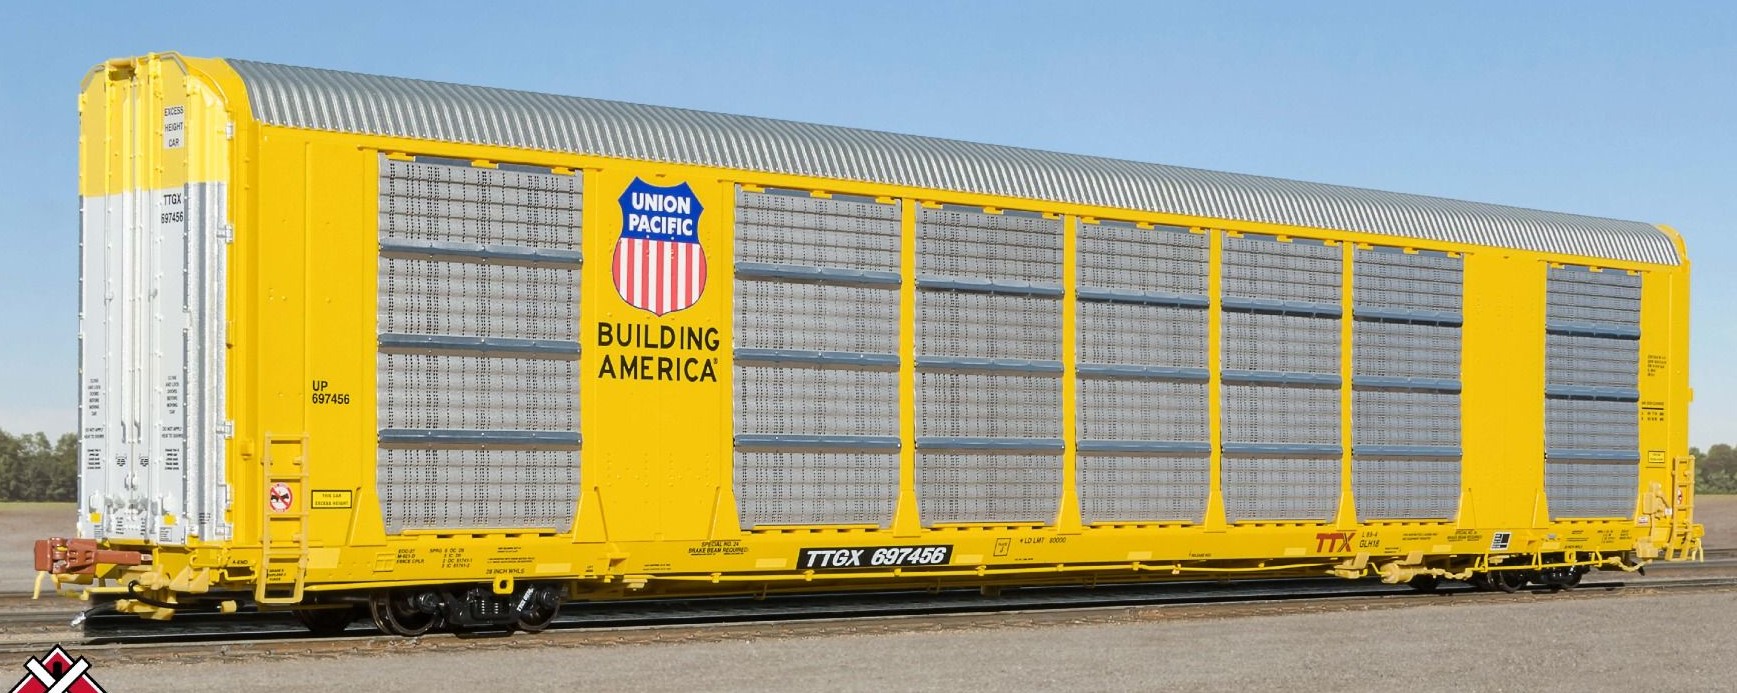 ScaleTrains Rivet Counter HO SXT38900 Gunderson Multi-Max Autorack Union Pacific Yellow 'Building America' TTGX #697553